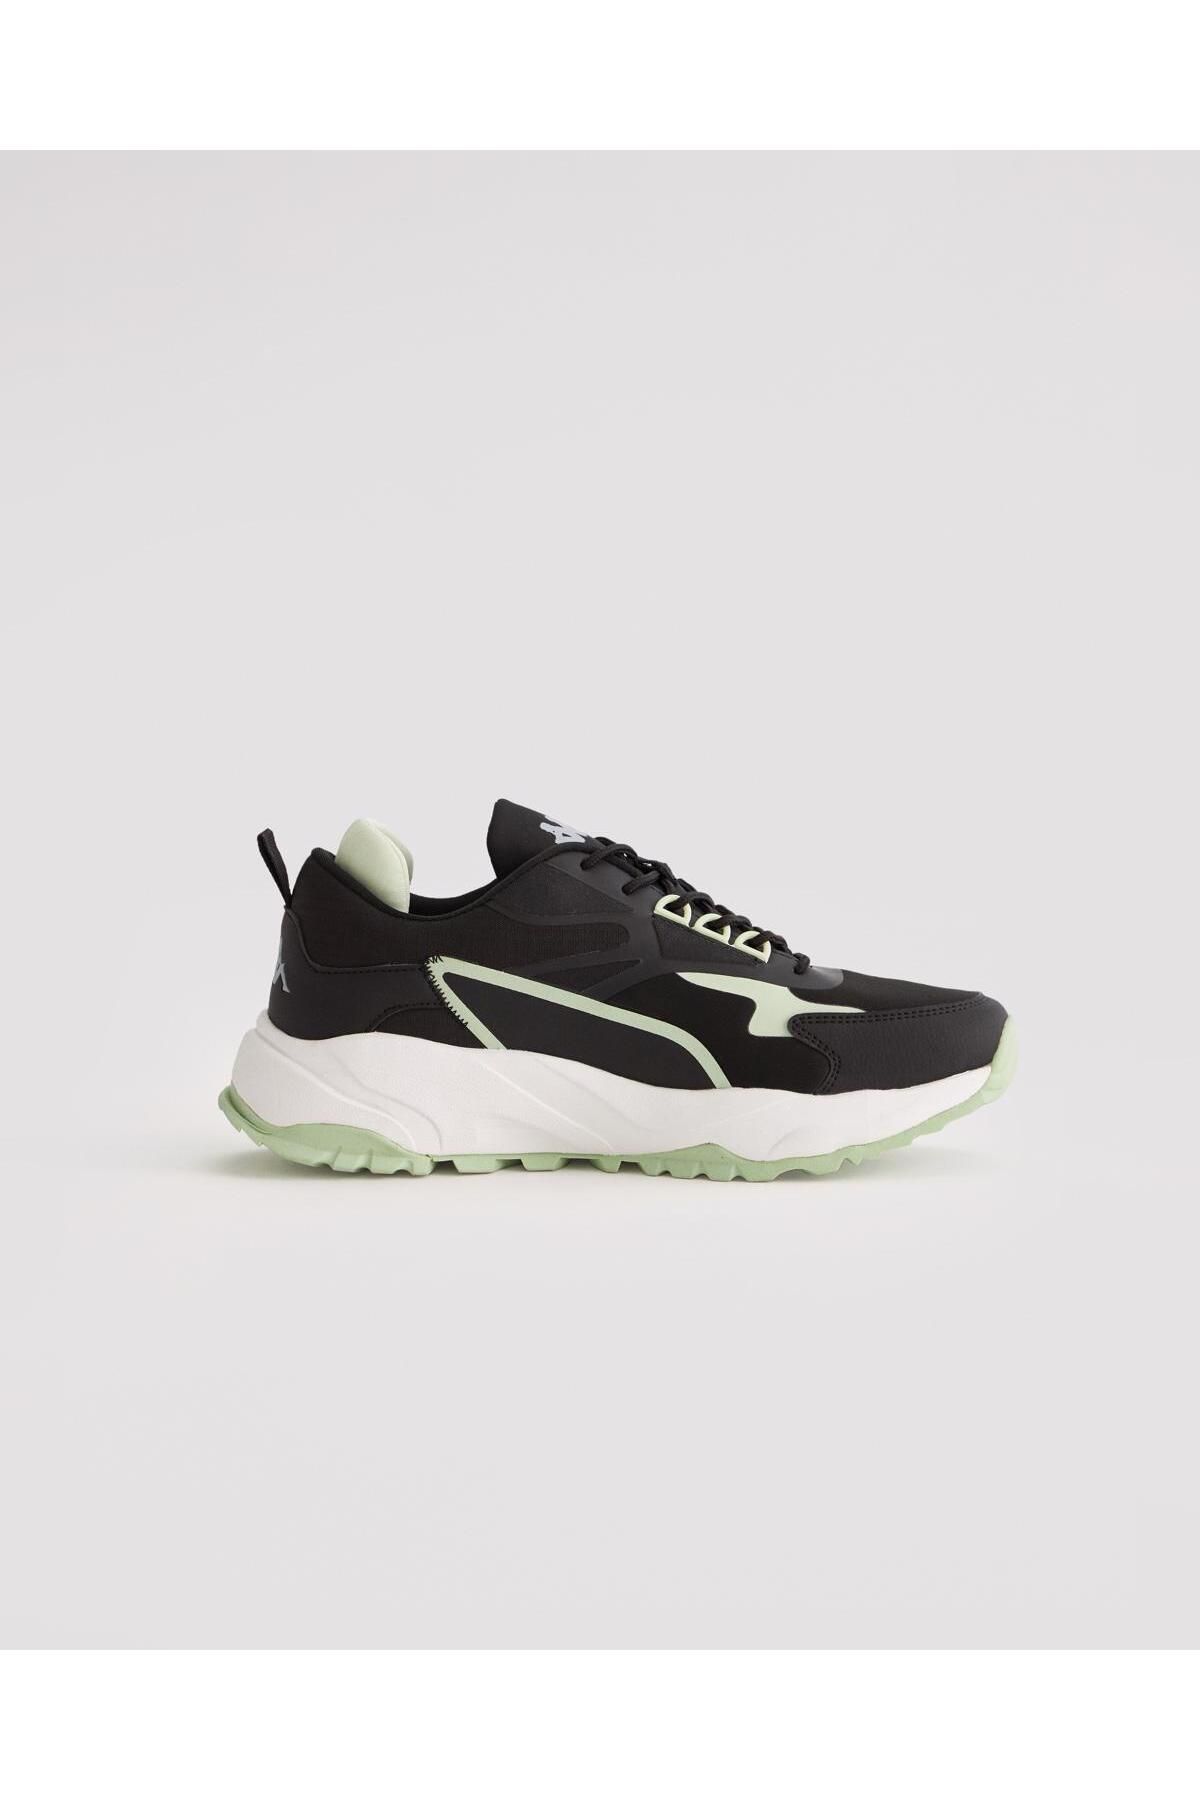 Kappa Authentic 3 Sneaker - Altin Yeşili Trendyol Siyah-mint Unisex Fiyatı, Yorumları